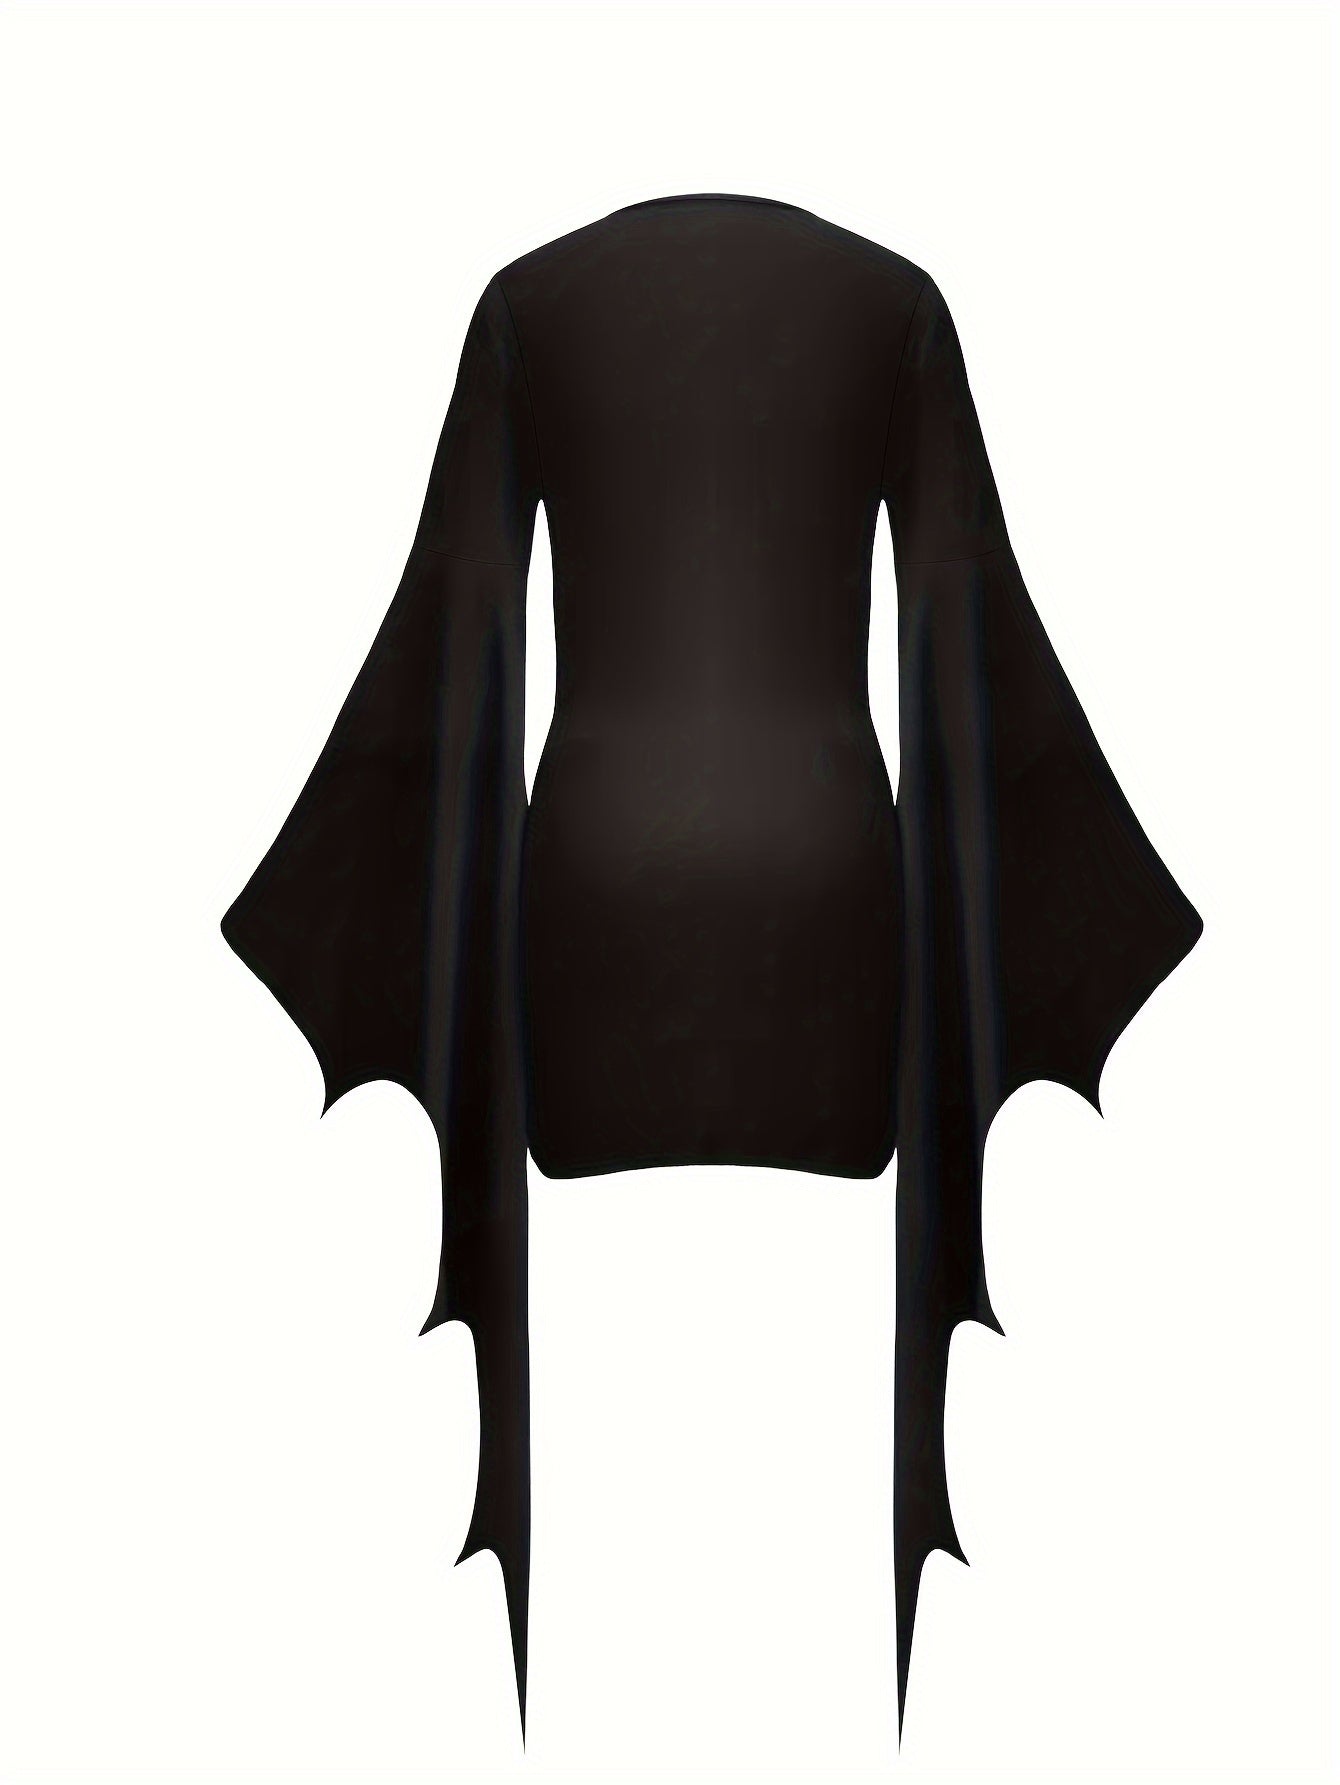 Elegant Gothic Batwing Sleeve Costumes Designed for Women